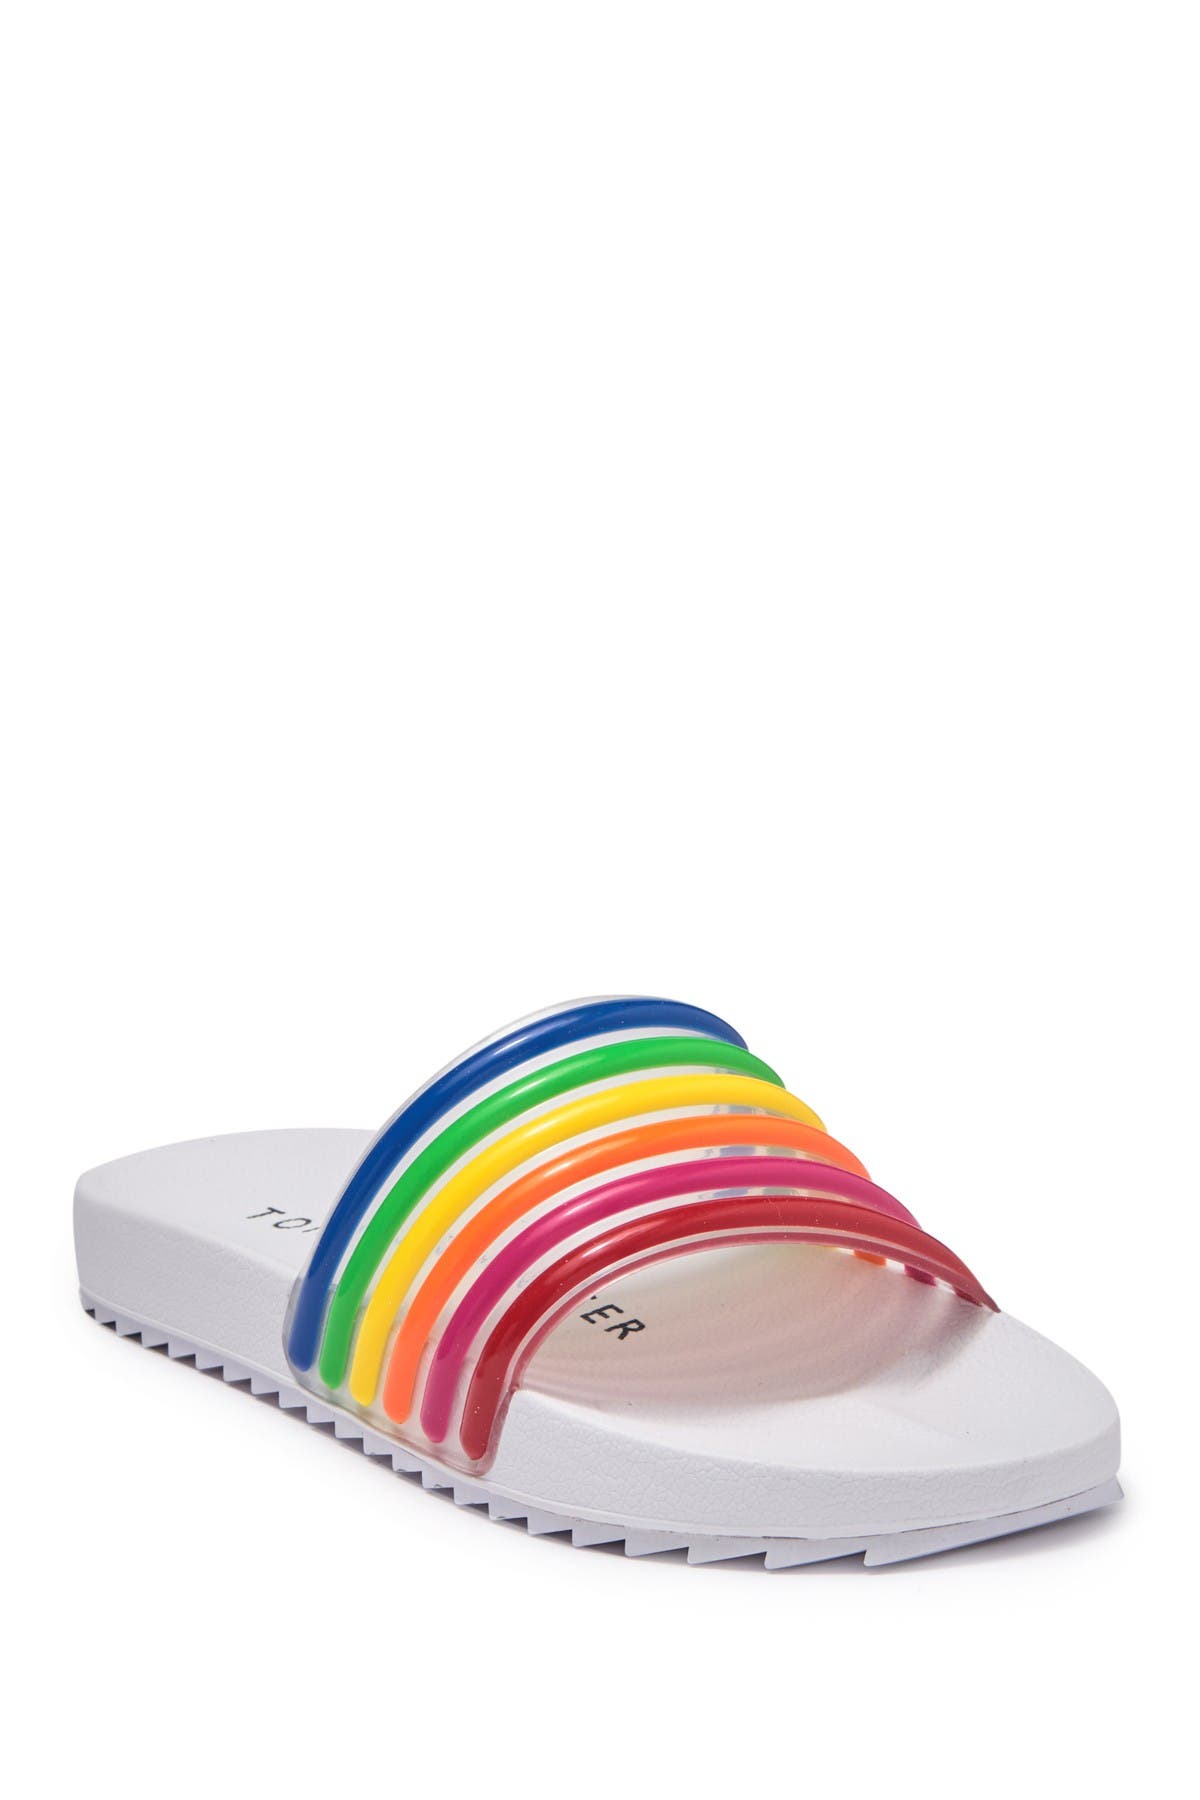 tommy hilfiger rainbow slides